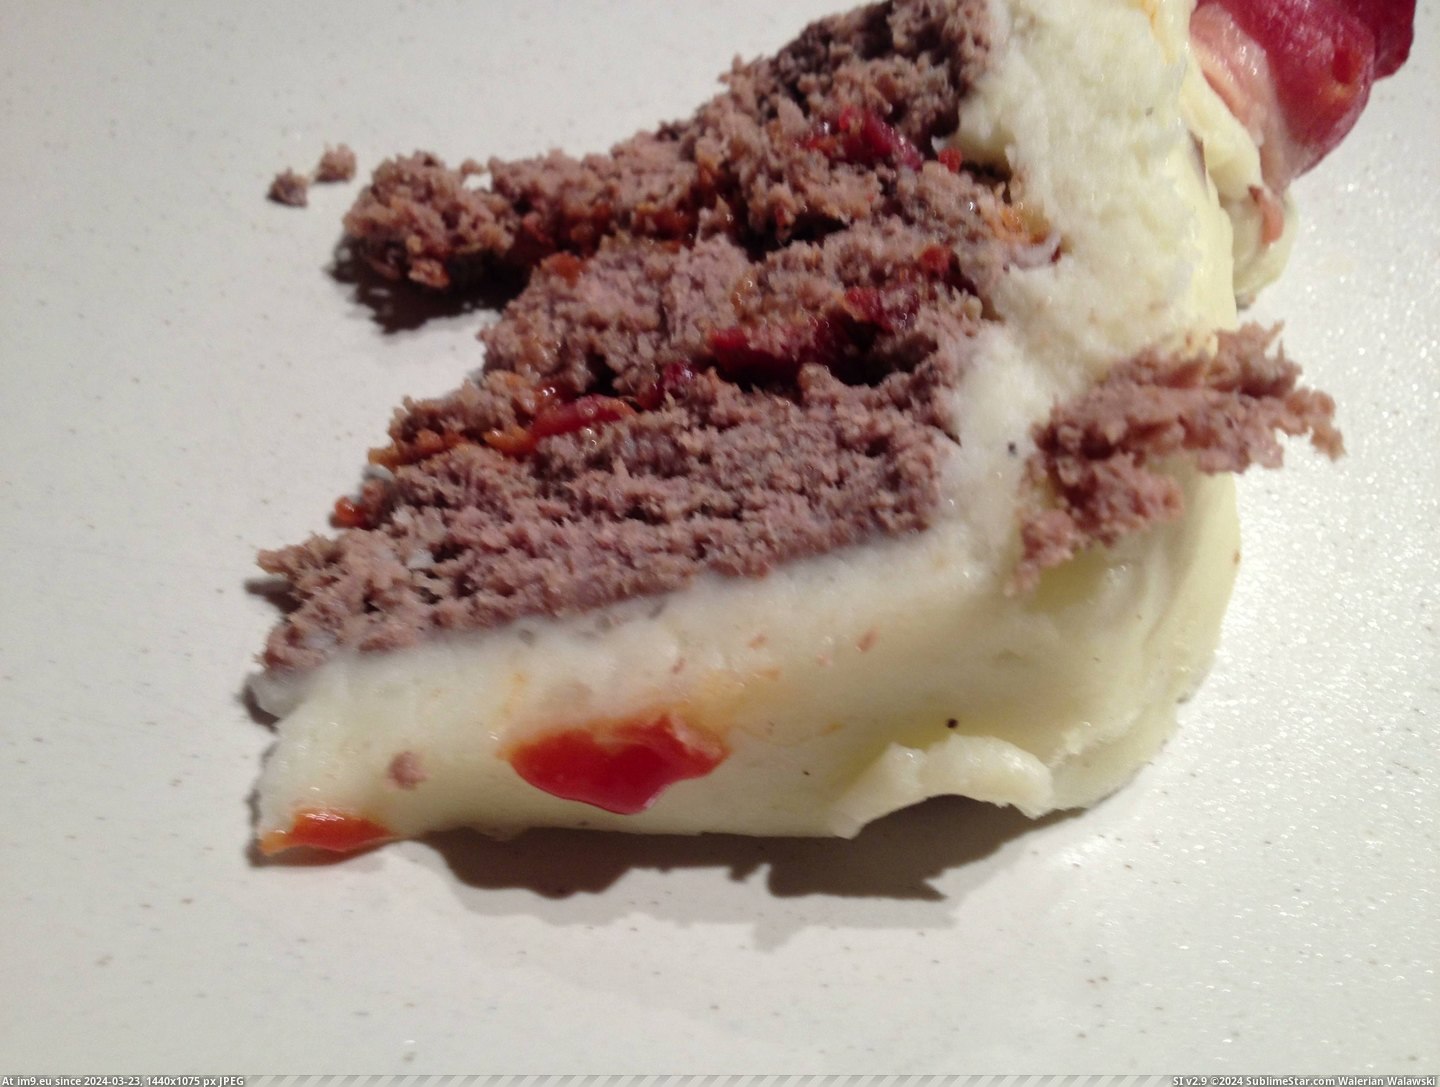  #Meatcake  [Pics] Meatcake 2 Pic. (Bild von album My r/PICS favs))